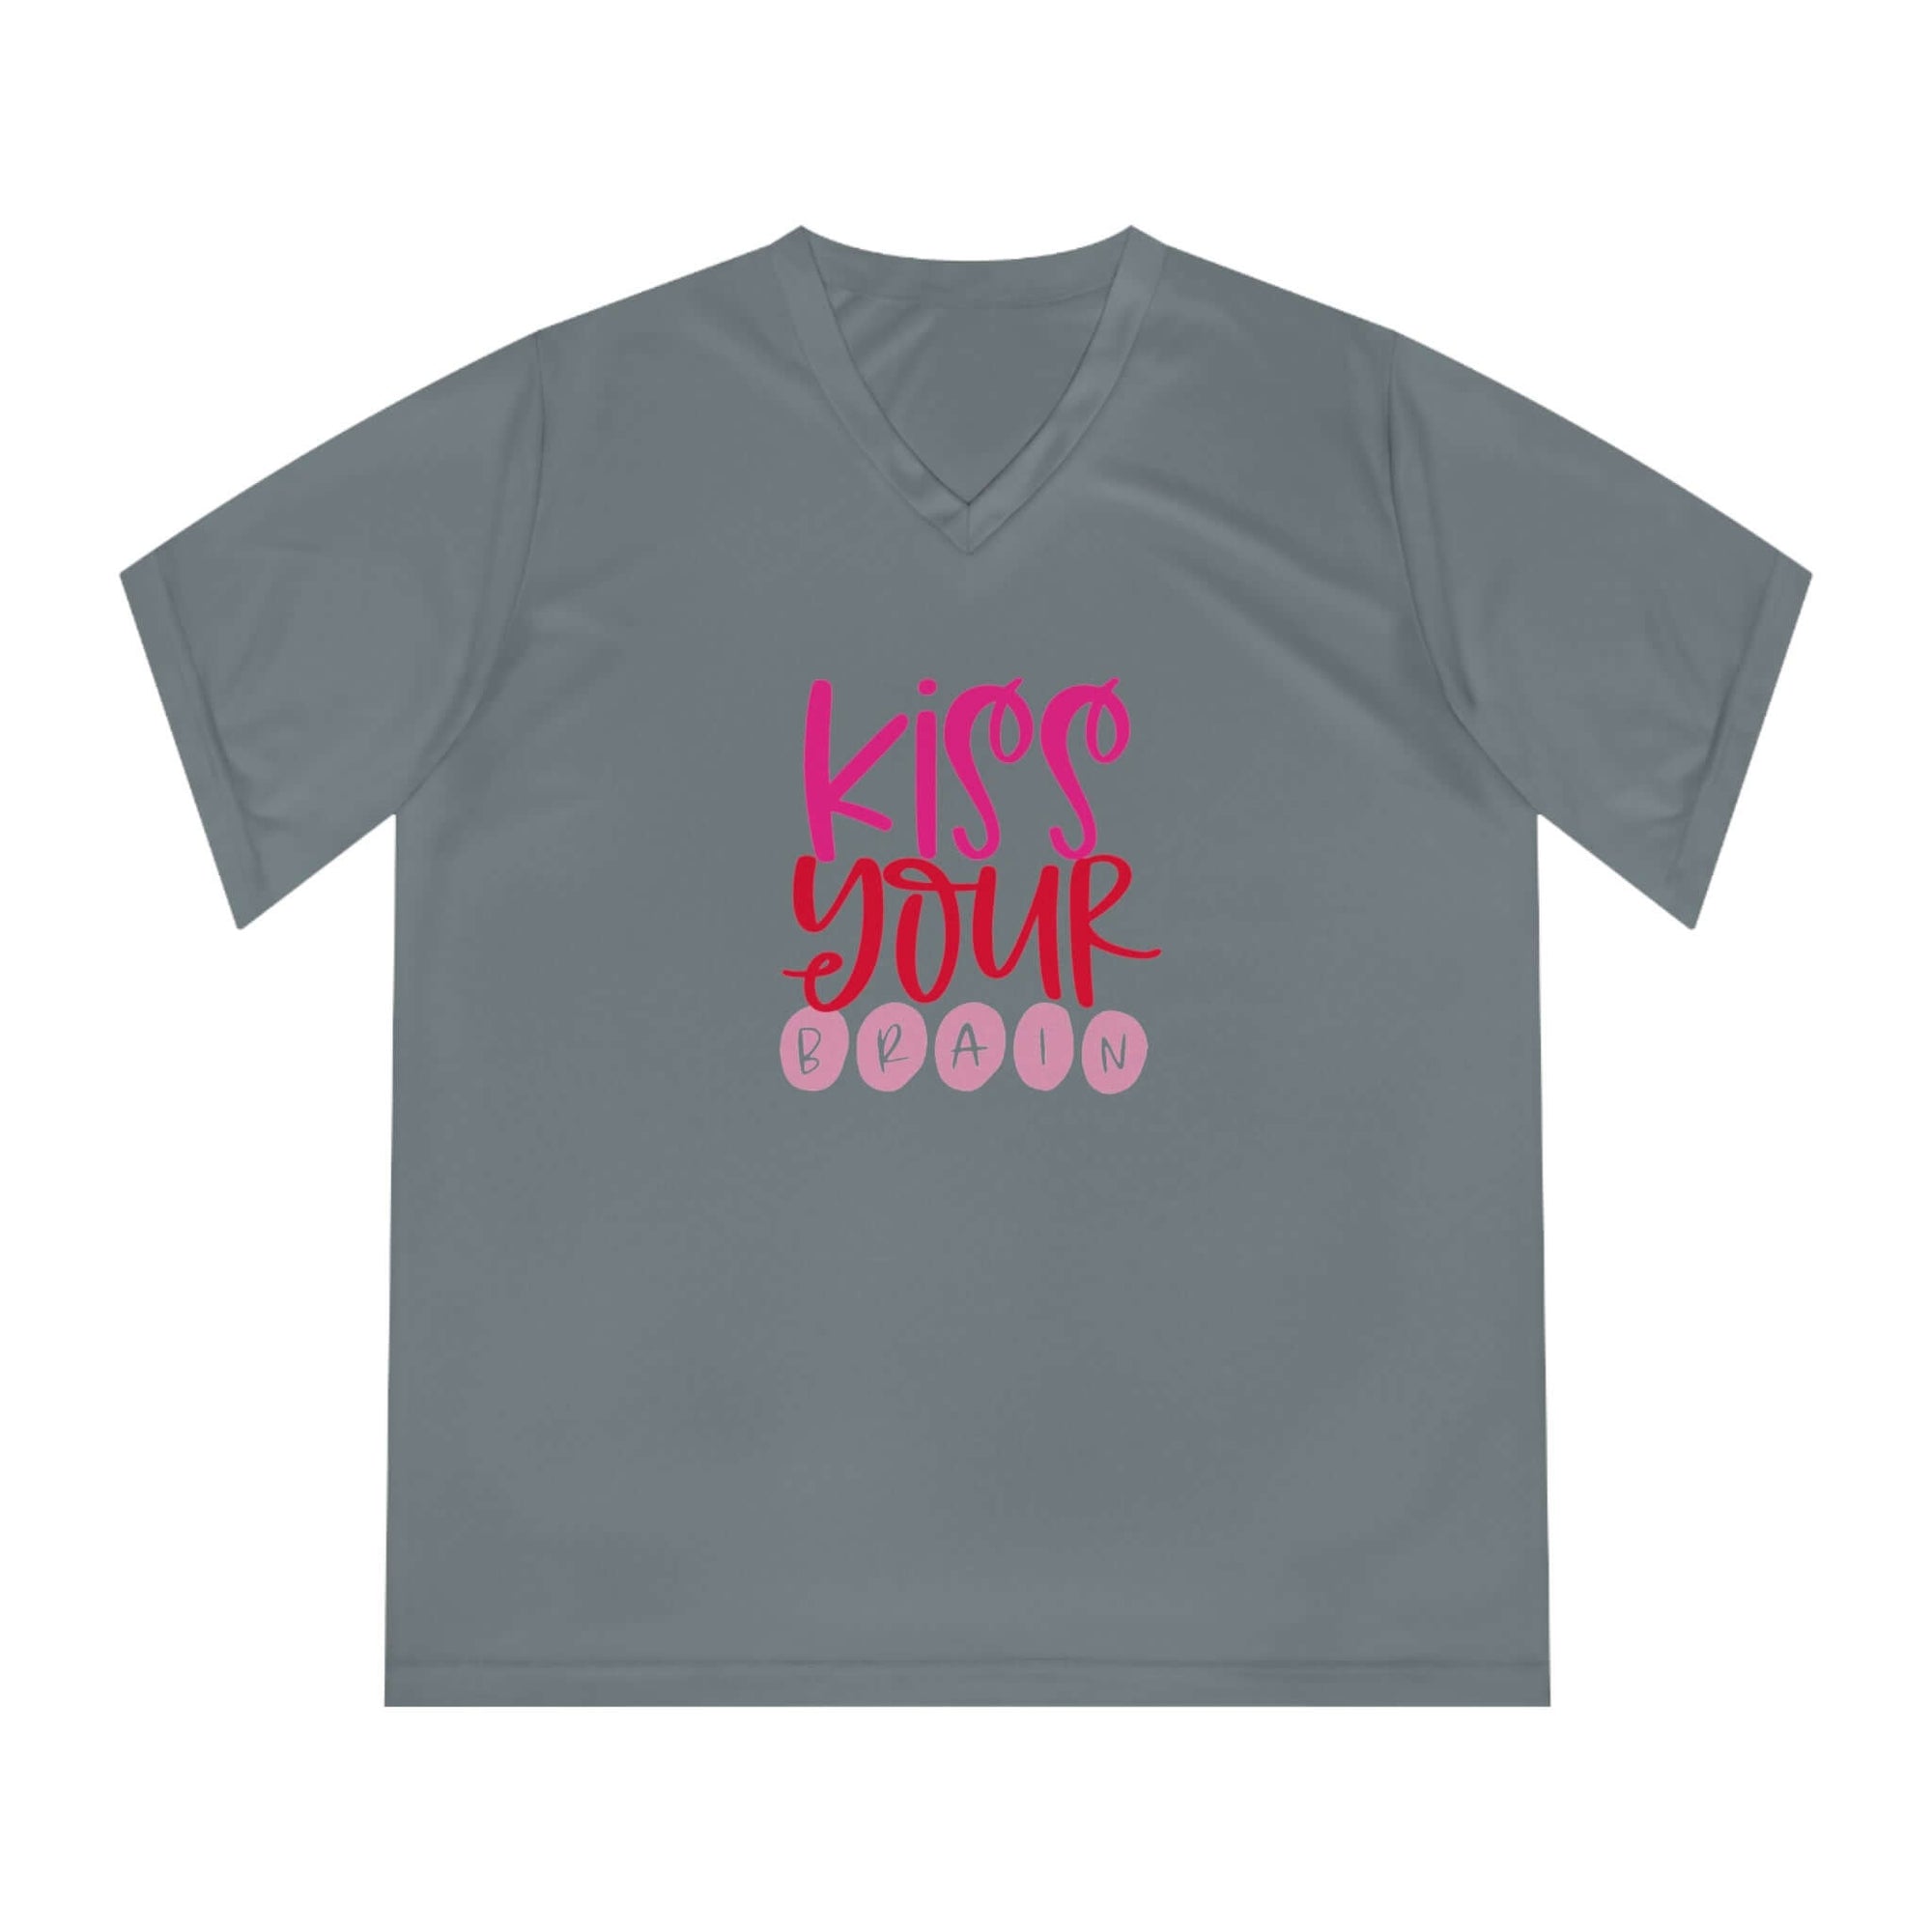 Hello Decodables | Kiss Your Brain Women's Performance V-Neck T-Shirt